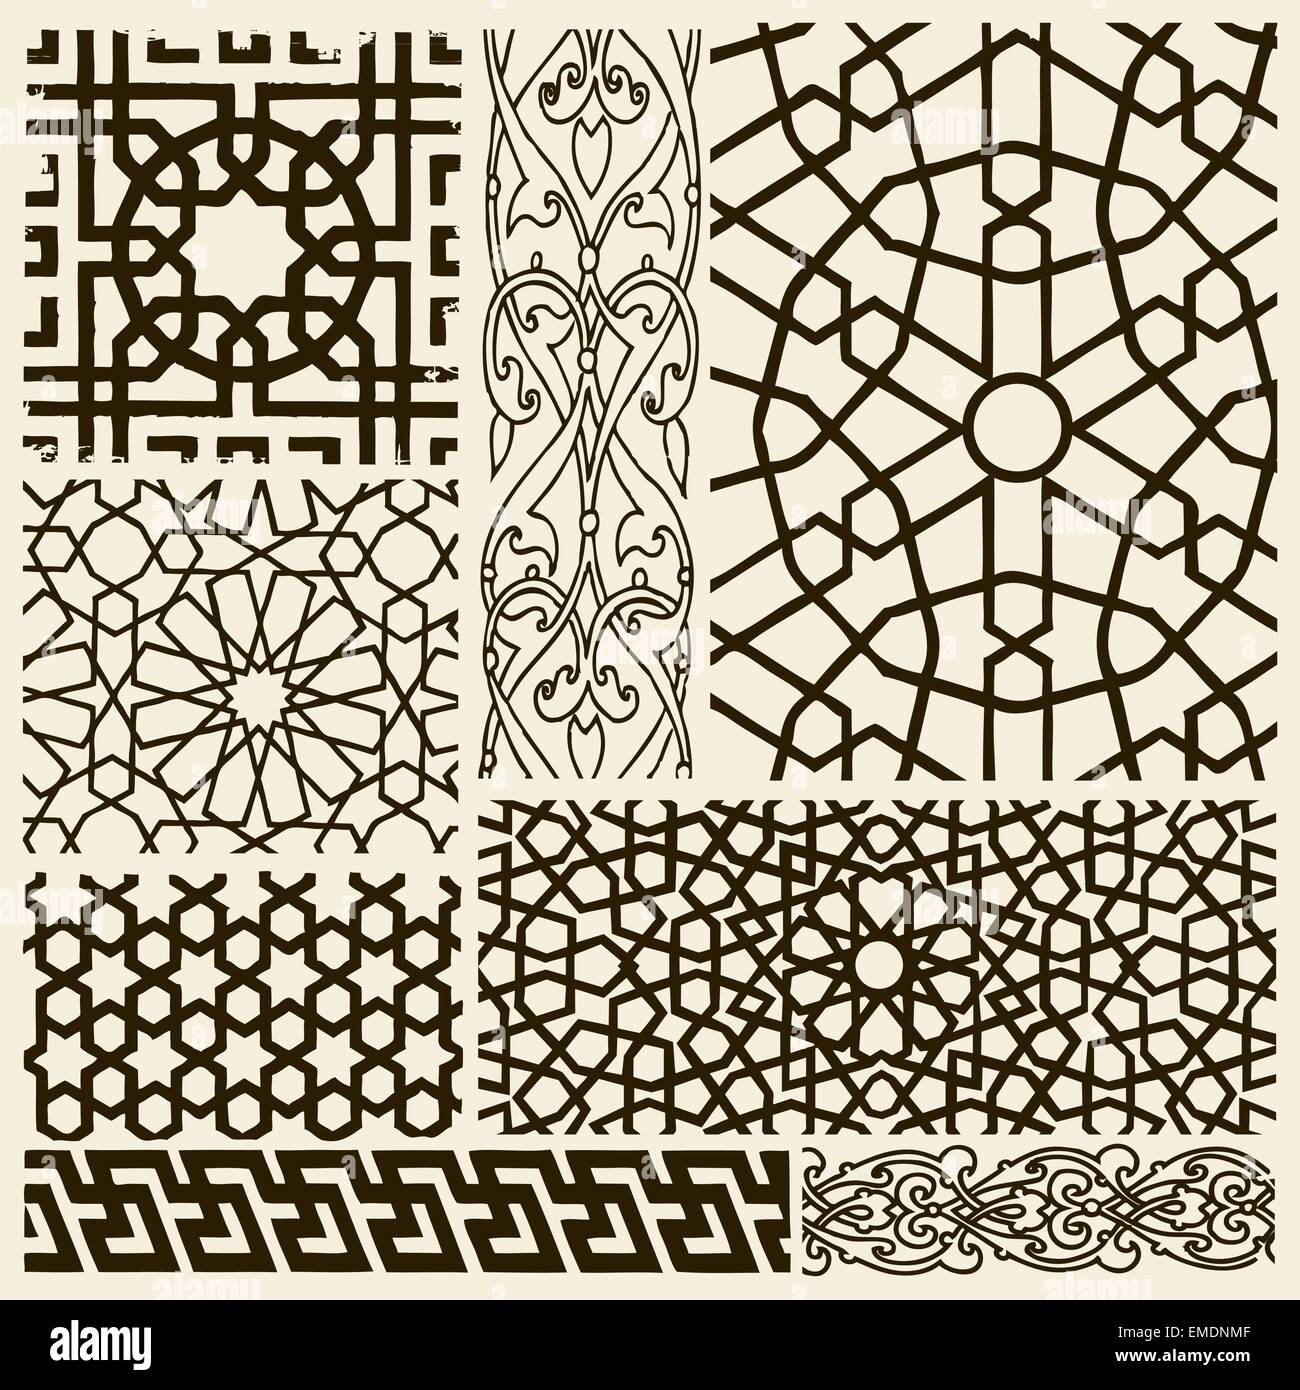 Arabesque Designs Illustrazione Vettoriale